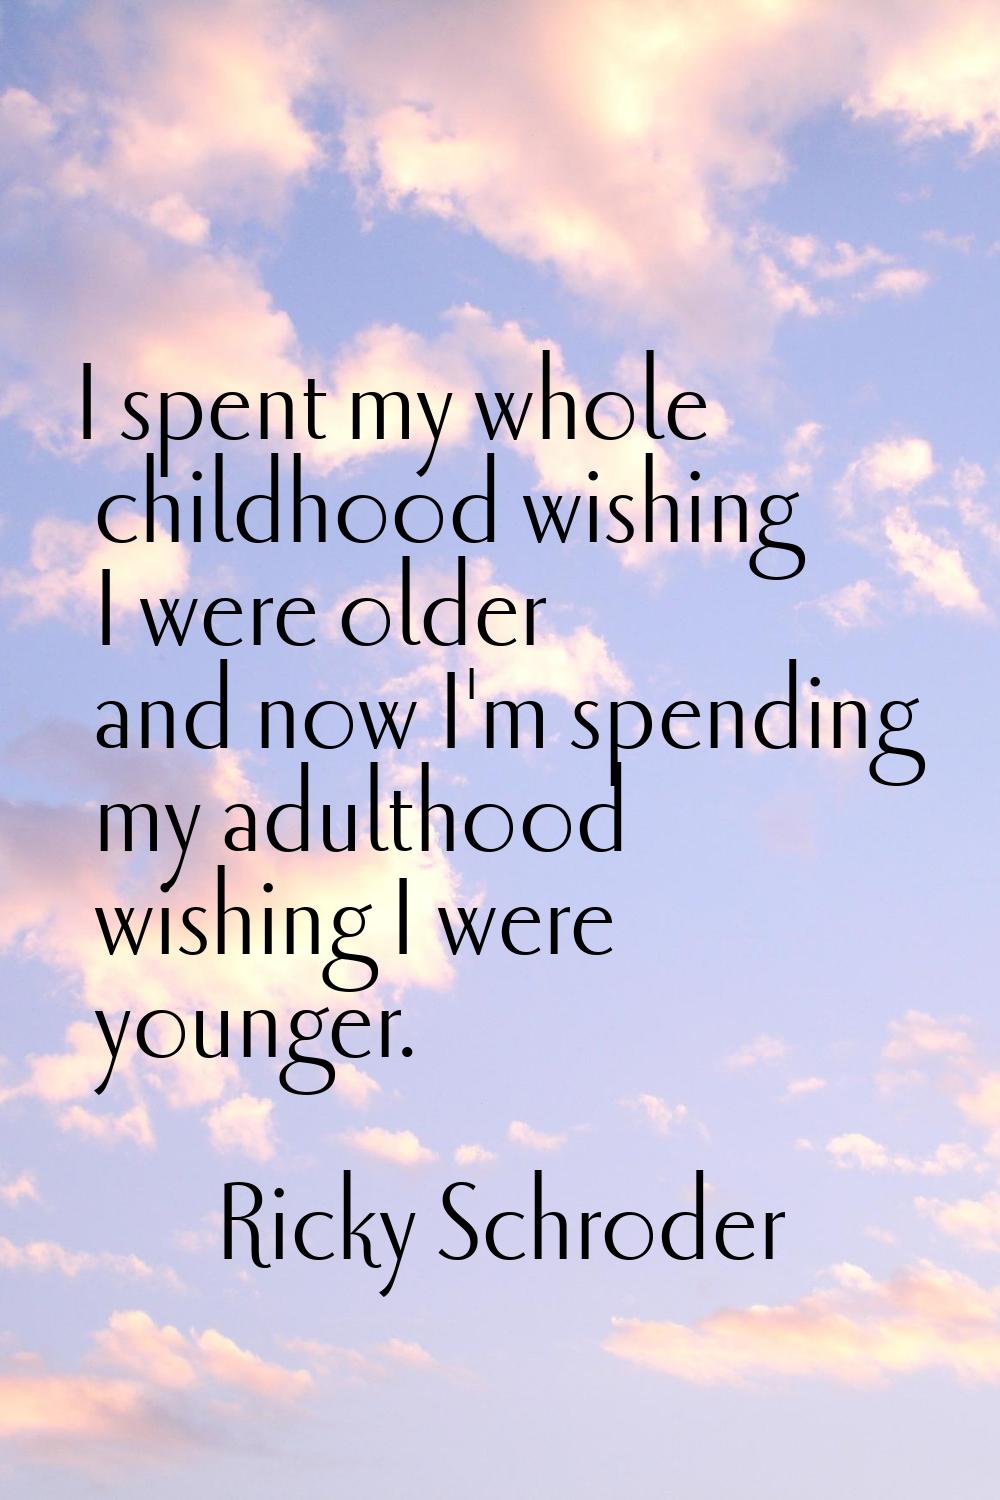 I spent my whole childhood wishing I were older and now I'm spending my adulthood wishing I were yo